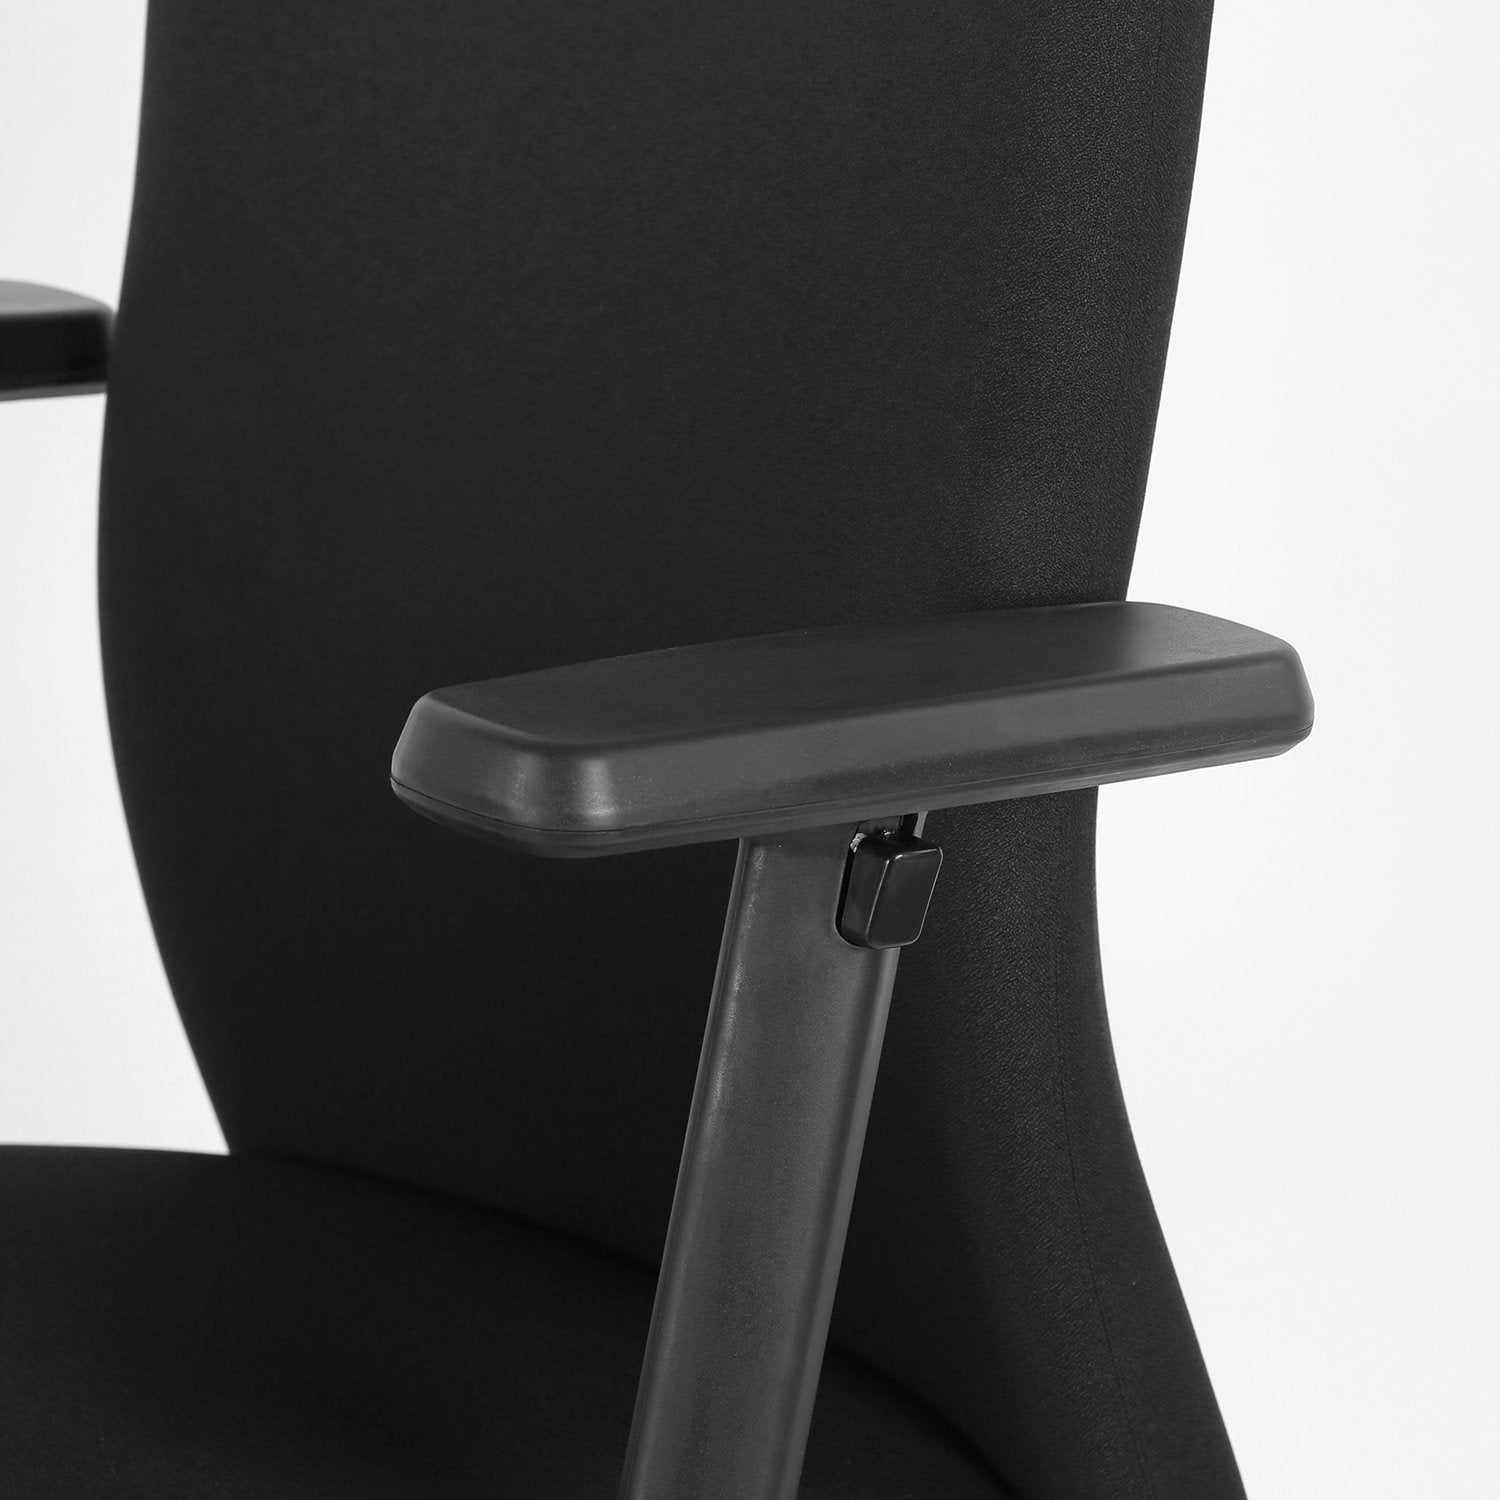 Gary Adjustable Armrest Fabric Low Back Chair (Black)